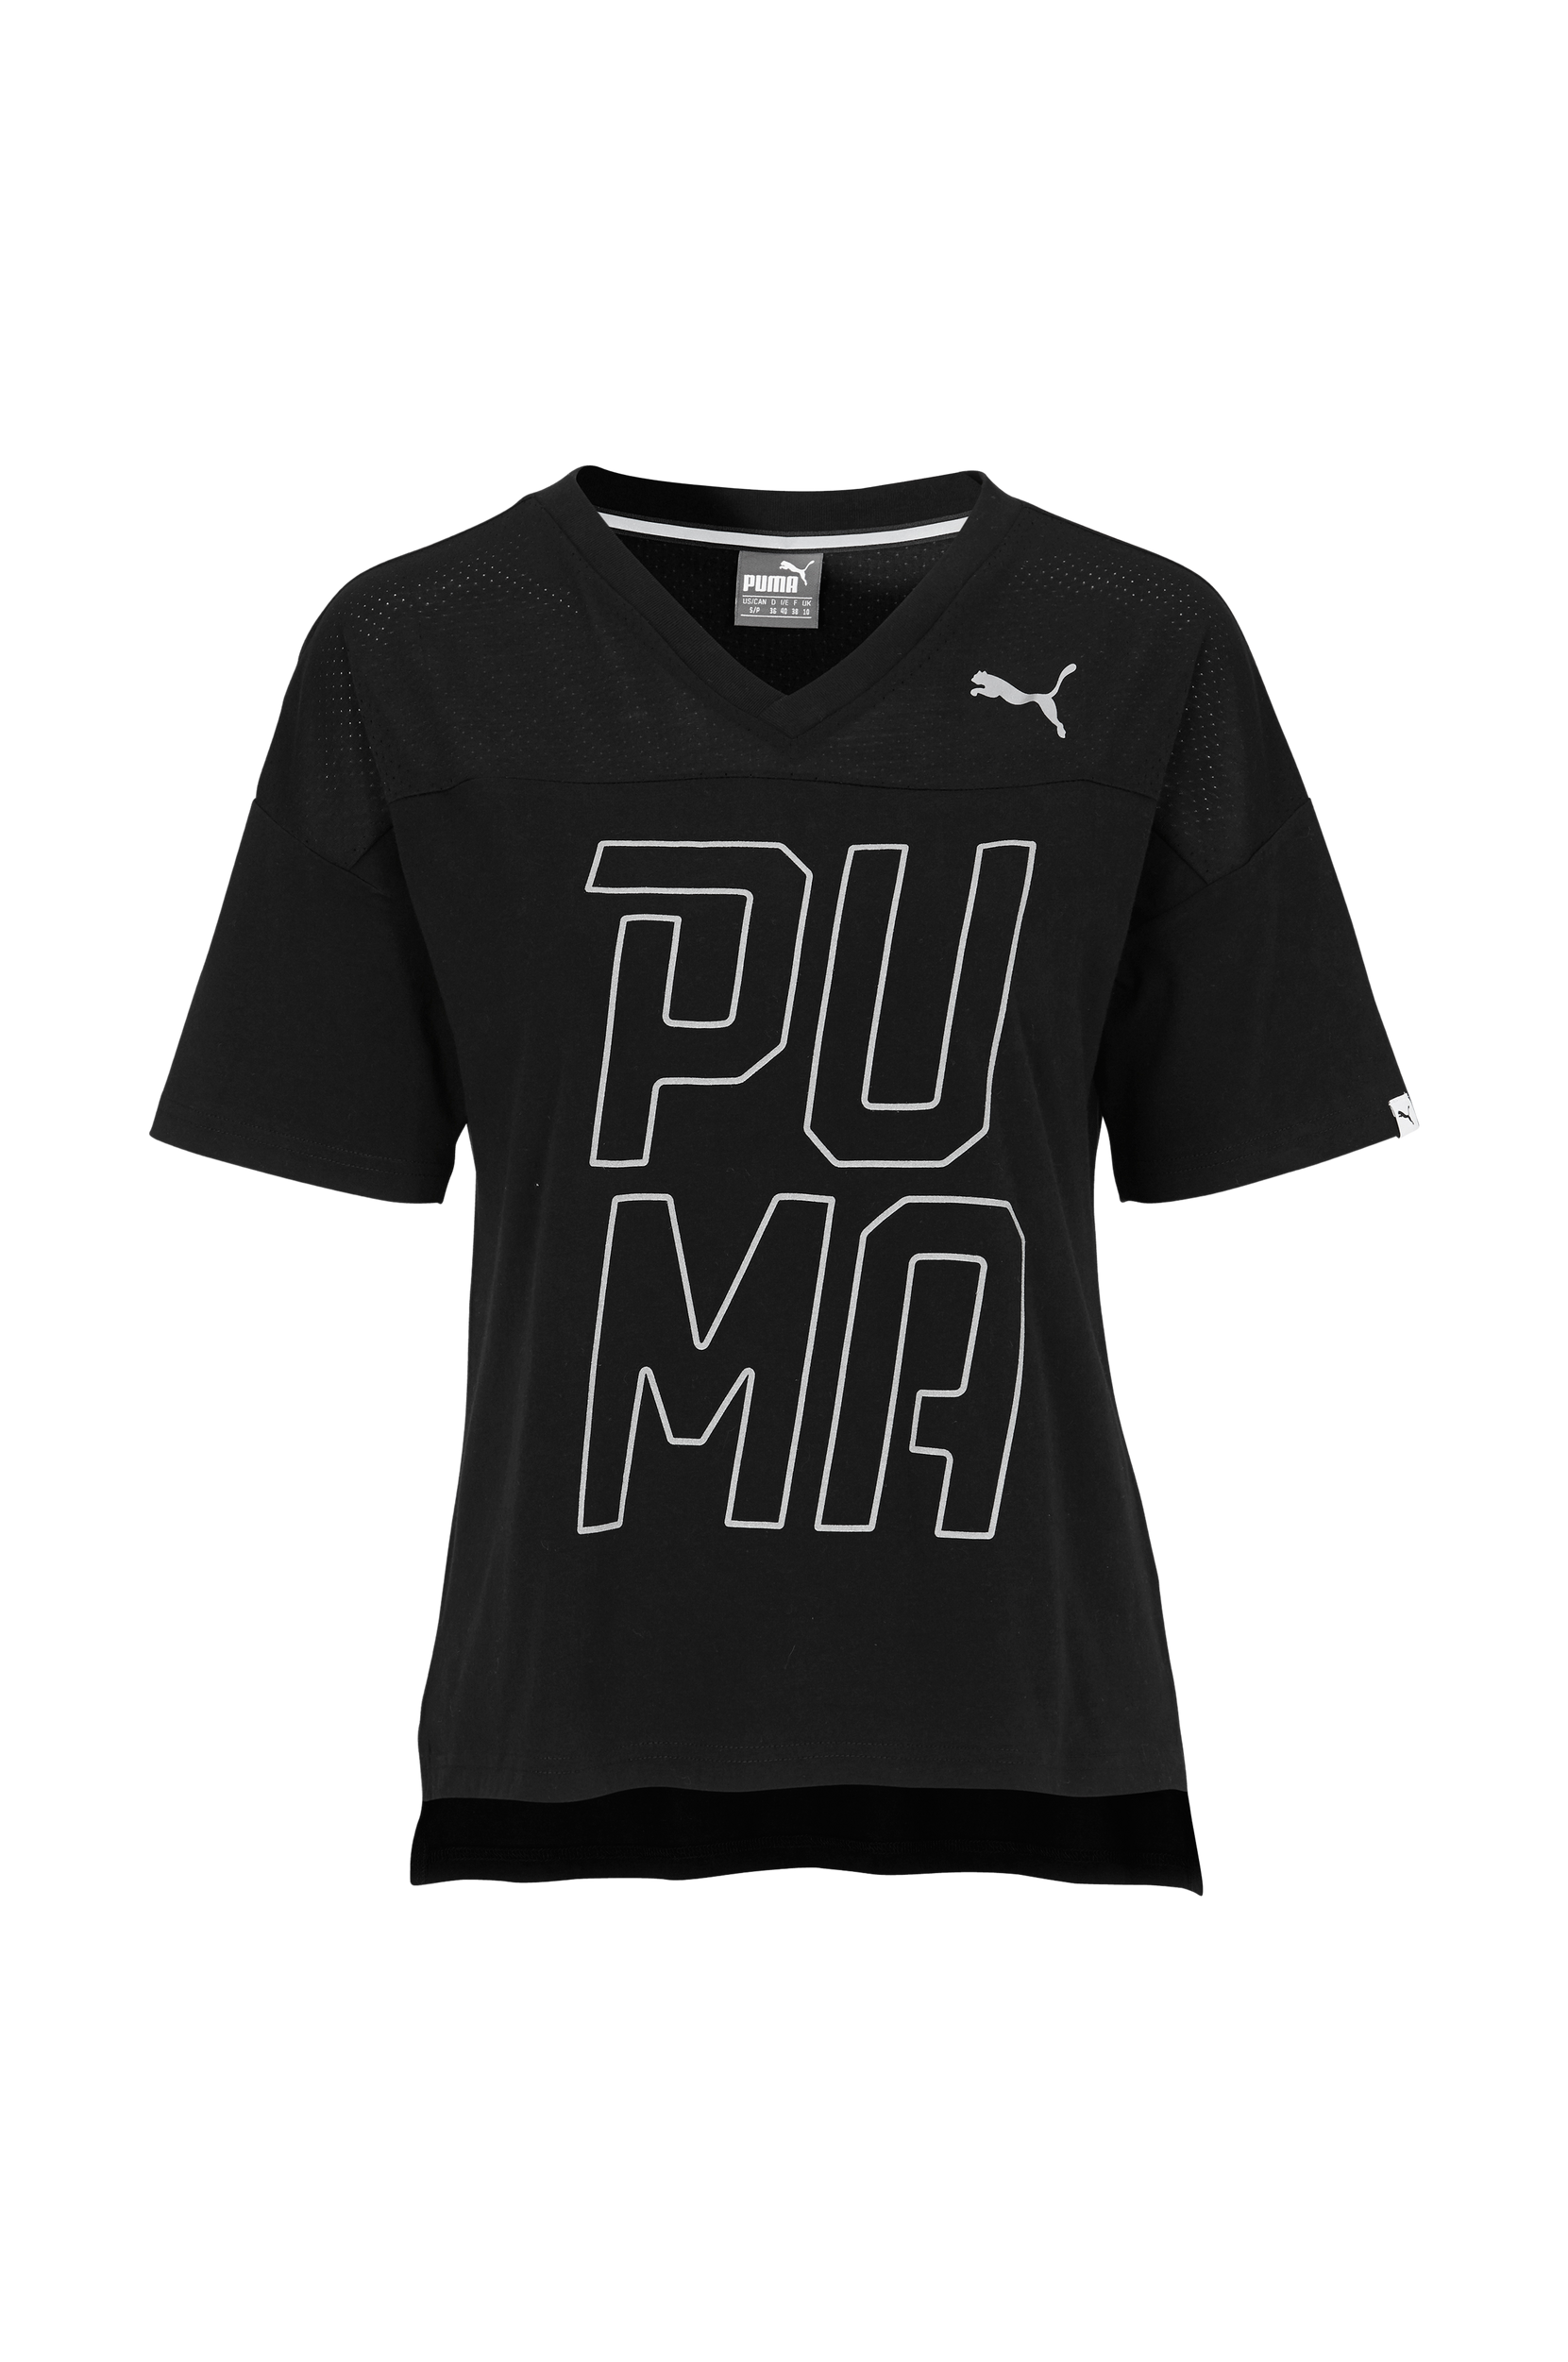 Swagger tee T paita, Puma